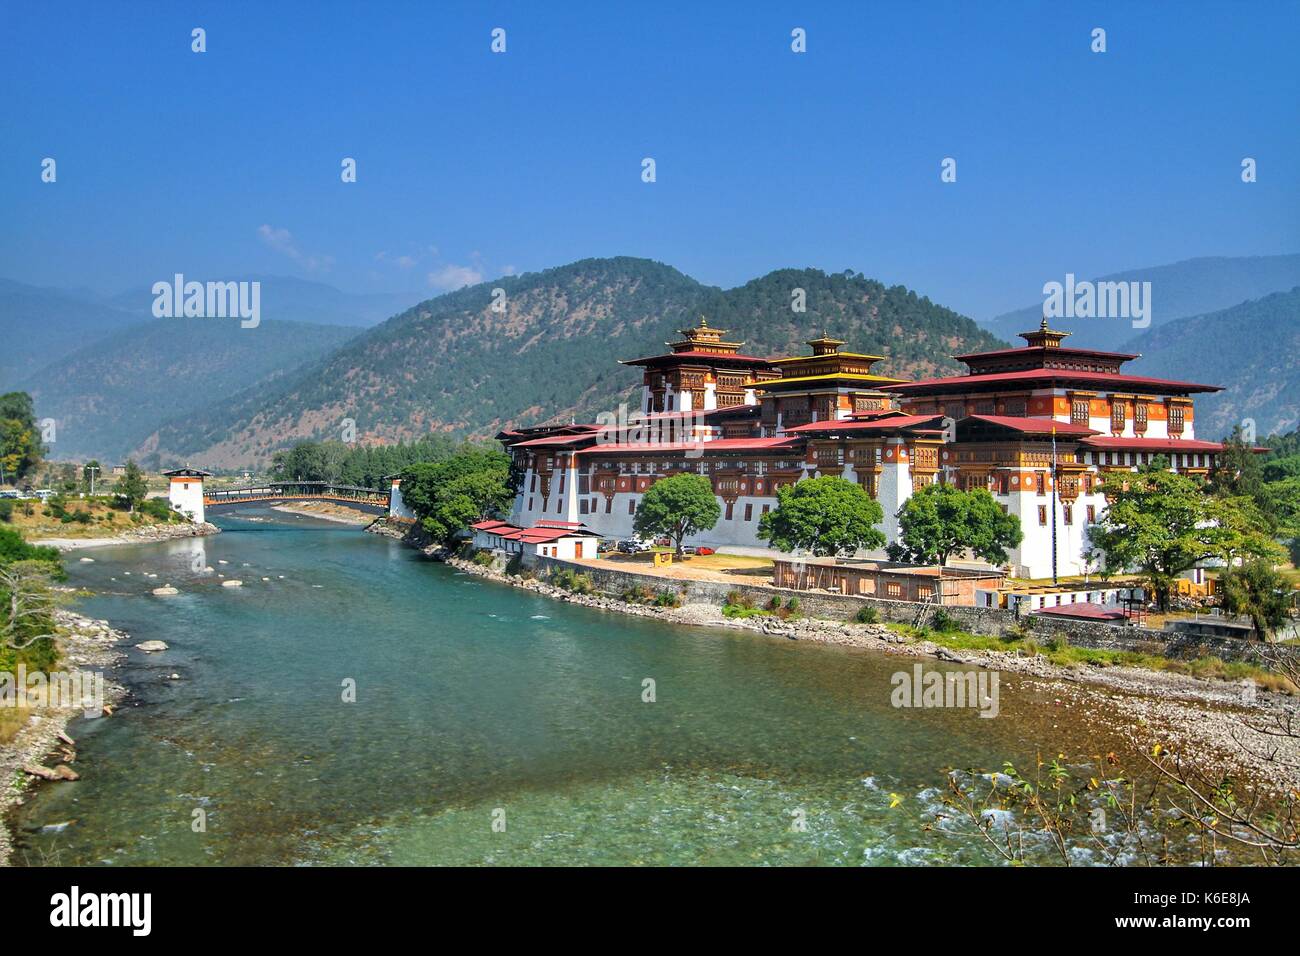 Punakha Dzong Monastery or Pungthang Dewachen Phodrang (Palace of Great Happiness) and Mo Chhu river in Punakha, the old capital of Bhutan. Stock Photo